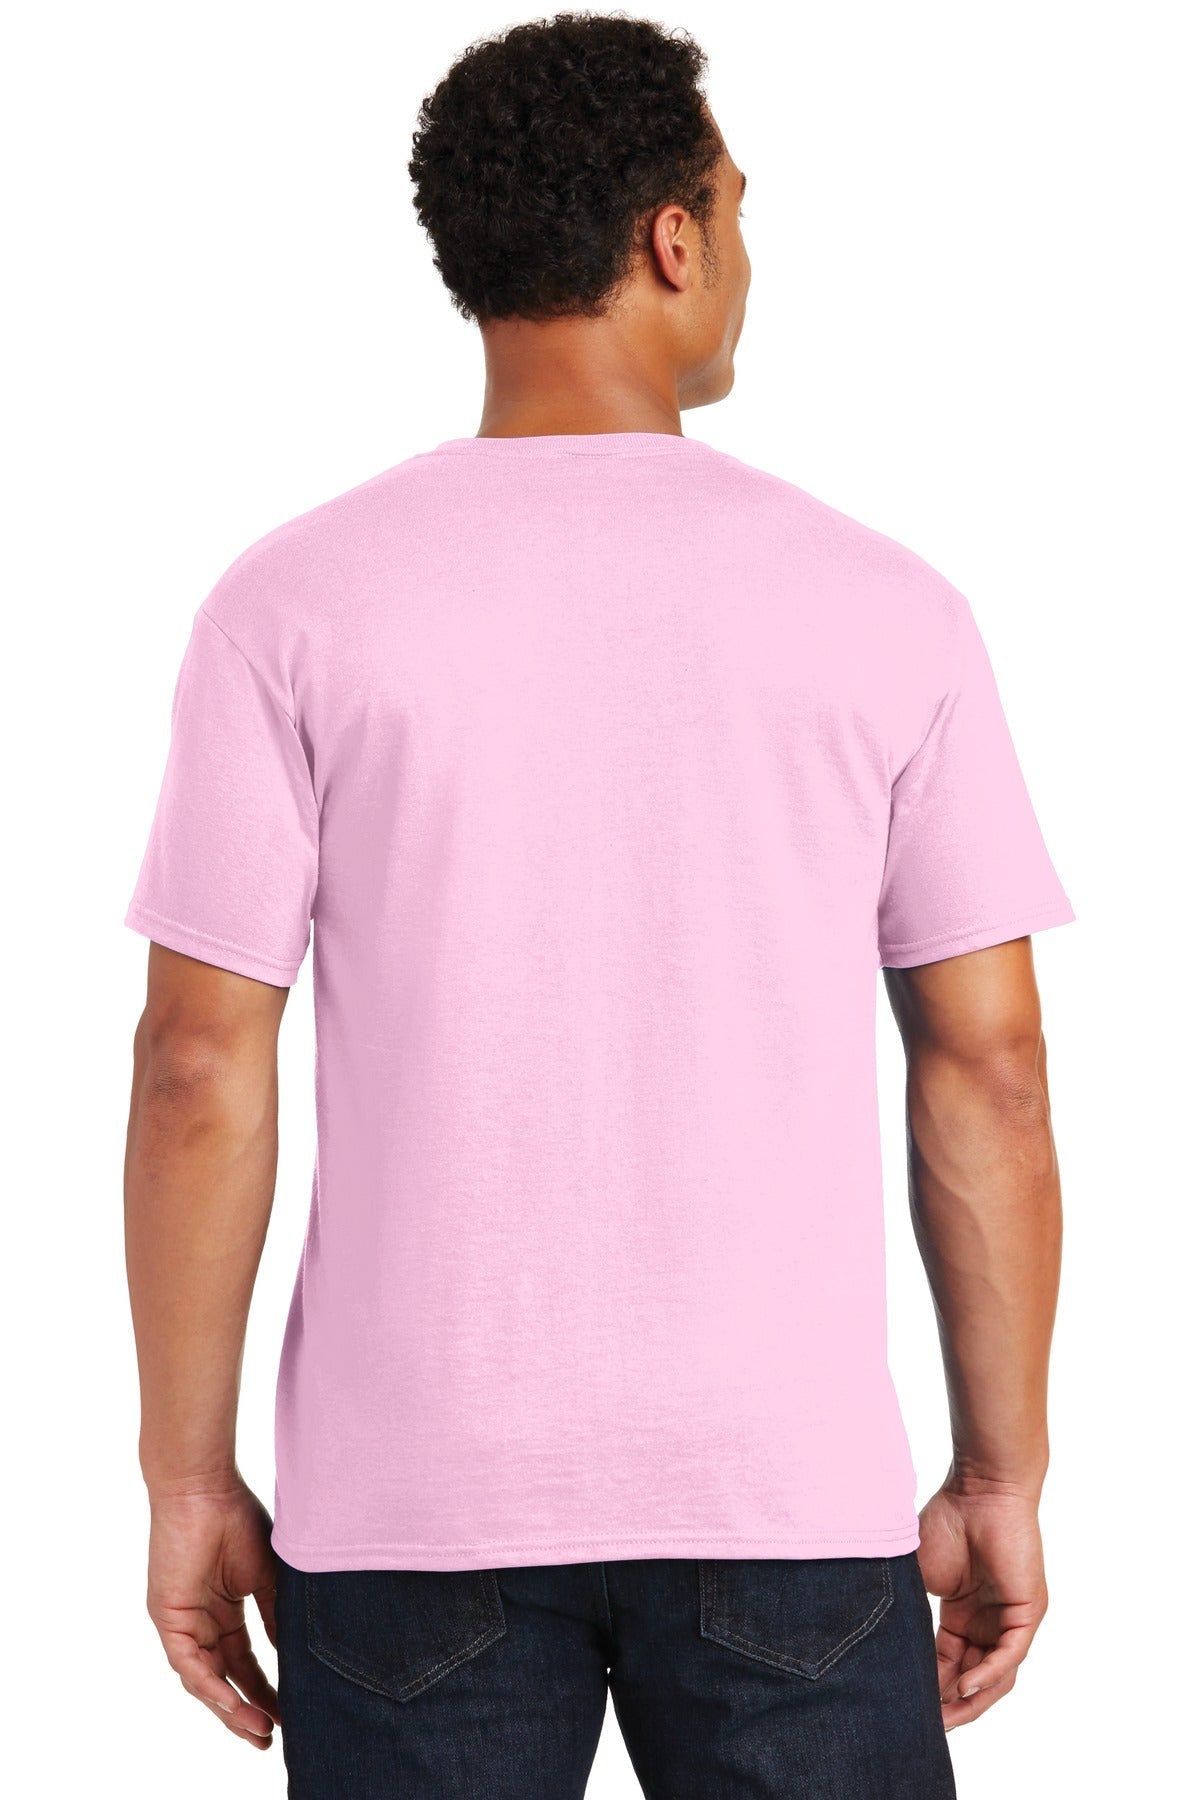 JERZEES® - Dri-Power® 50/50 Cotton/Poly T-Shirt. 29M [Classic Pink] - DFW Impression